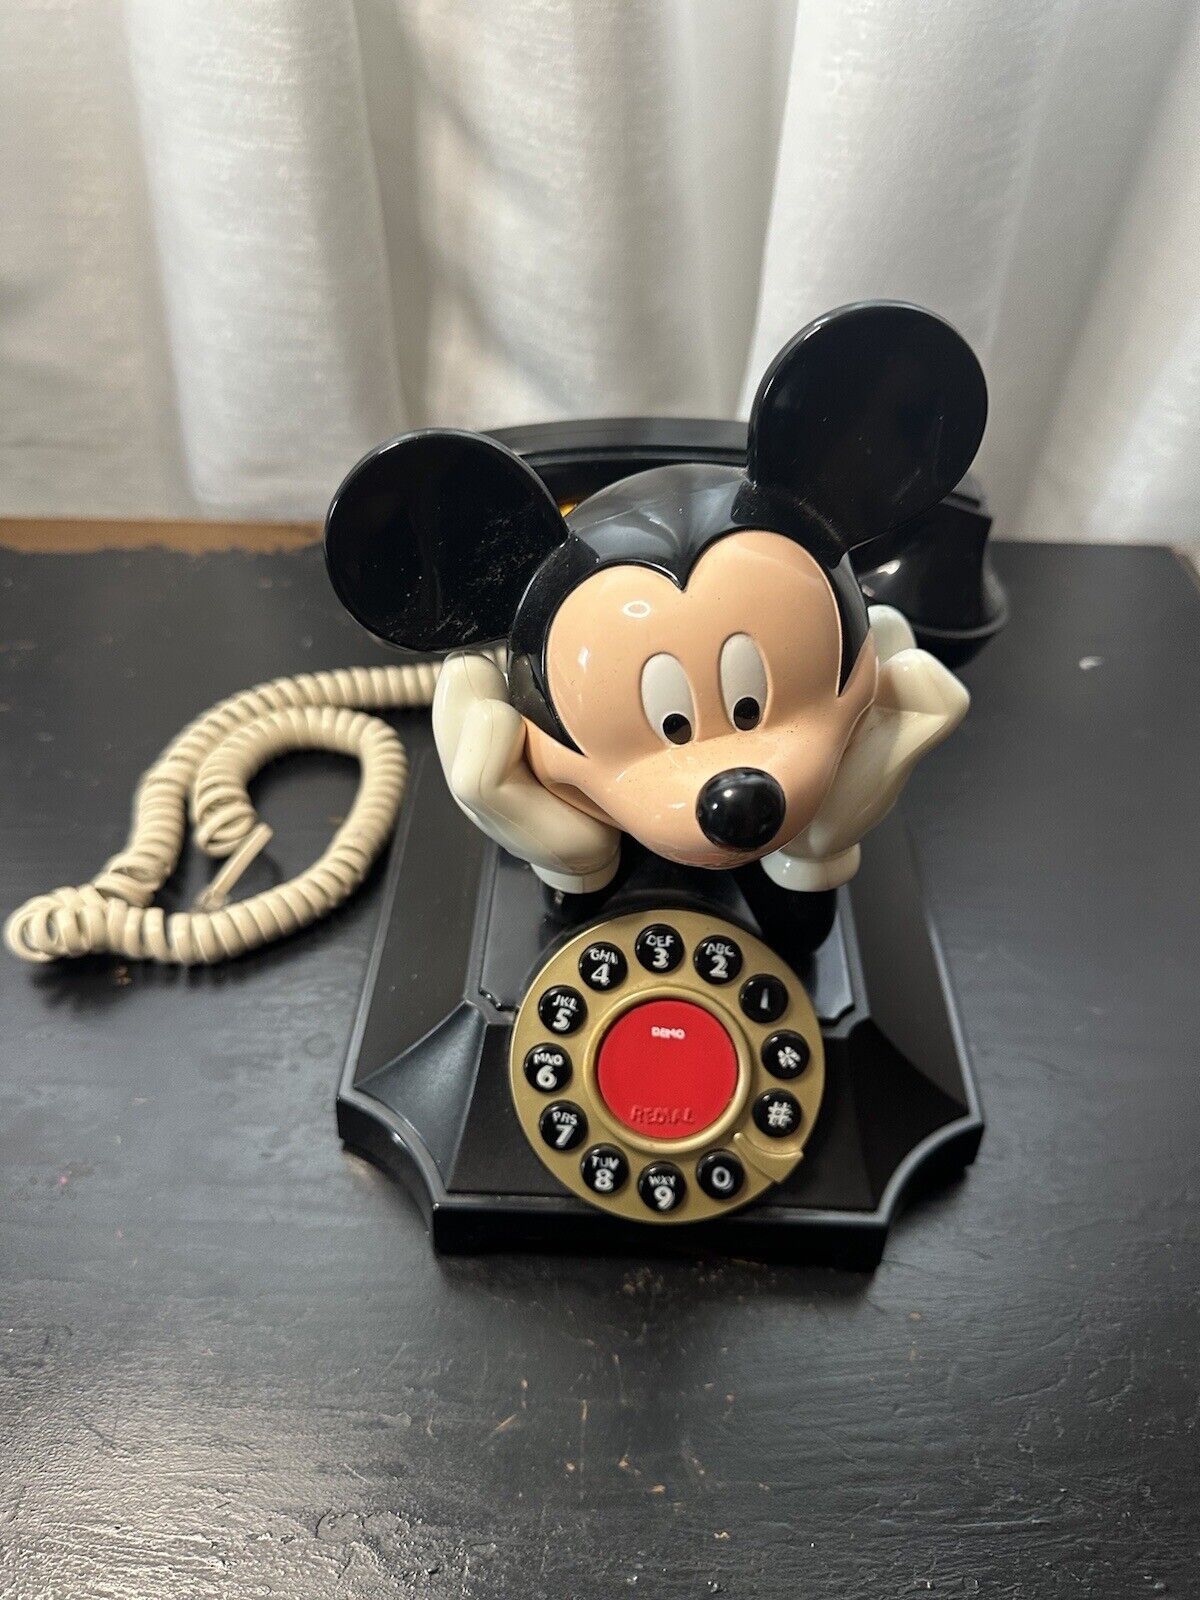 Vintage Telemania Disney Mickey Mouse Desk Phone Cord Push Button Telephone